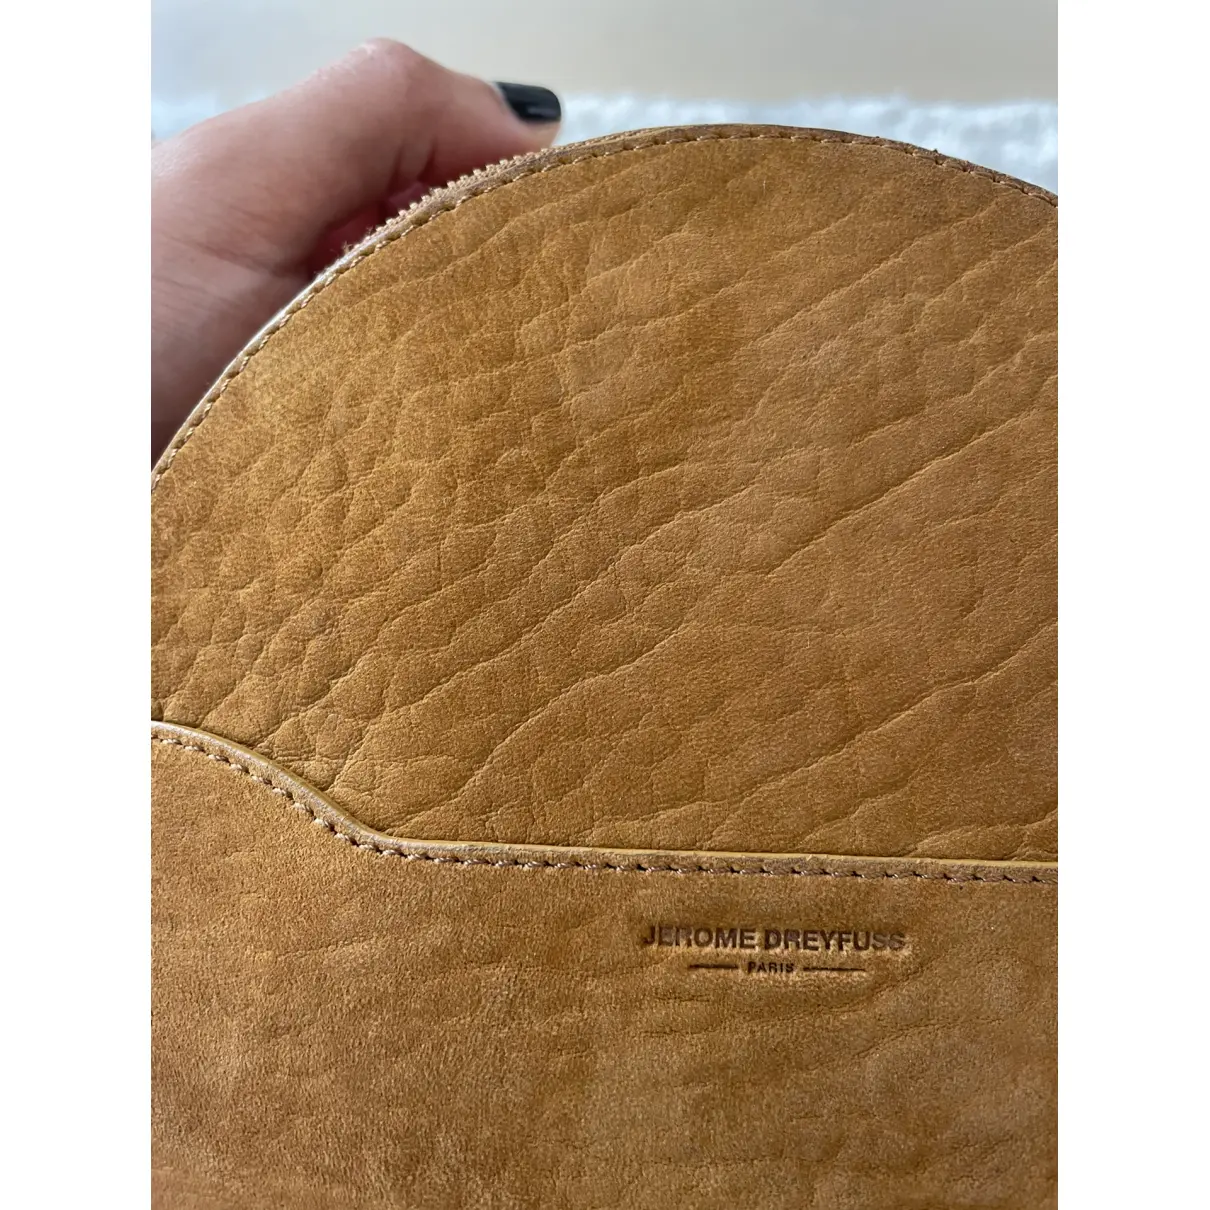 Buy Jerome Dreyfuss Rémi leather crossbody bag online